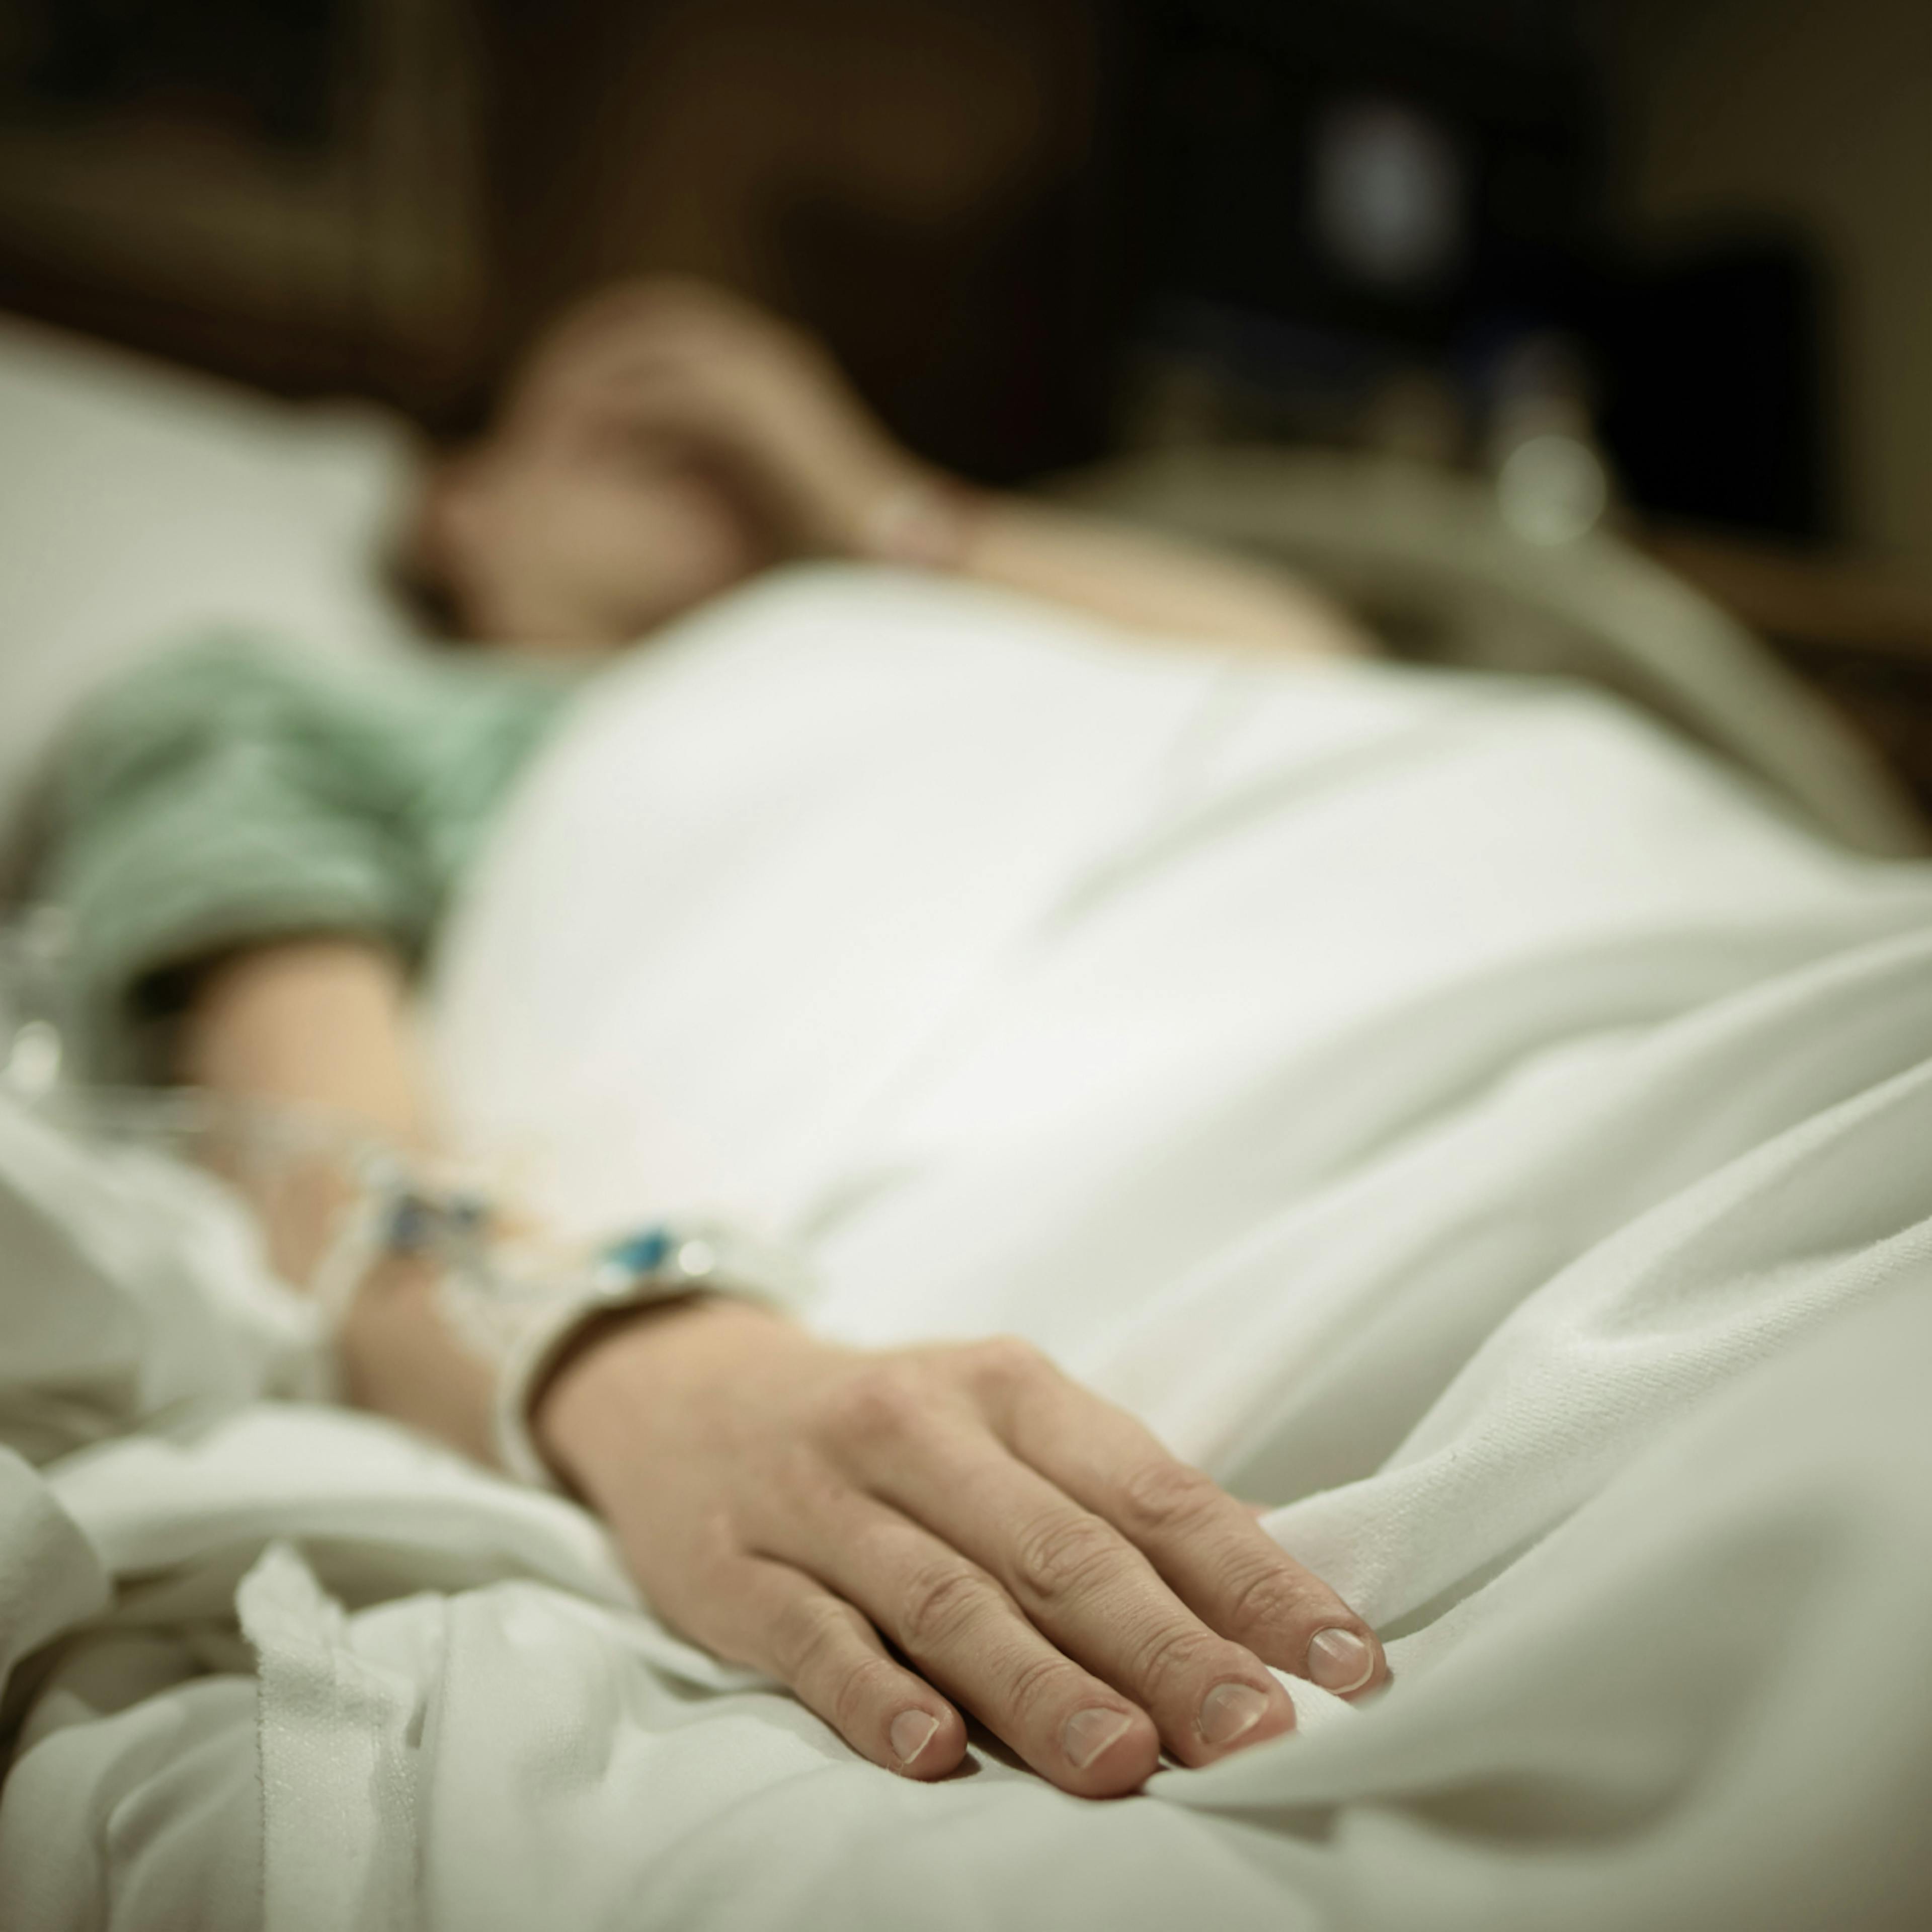 Women face horrible medical treatment at hospitals in Bosnia.